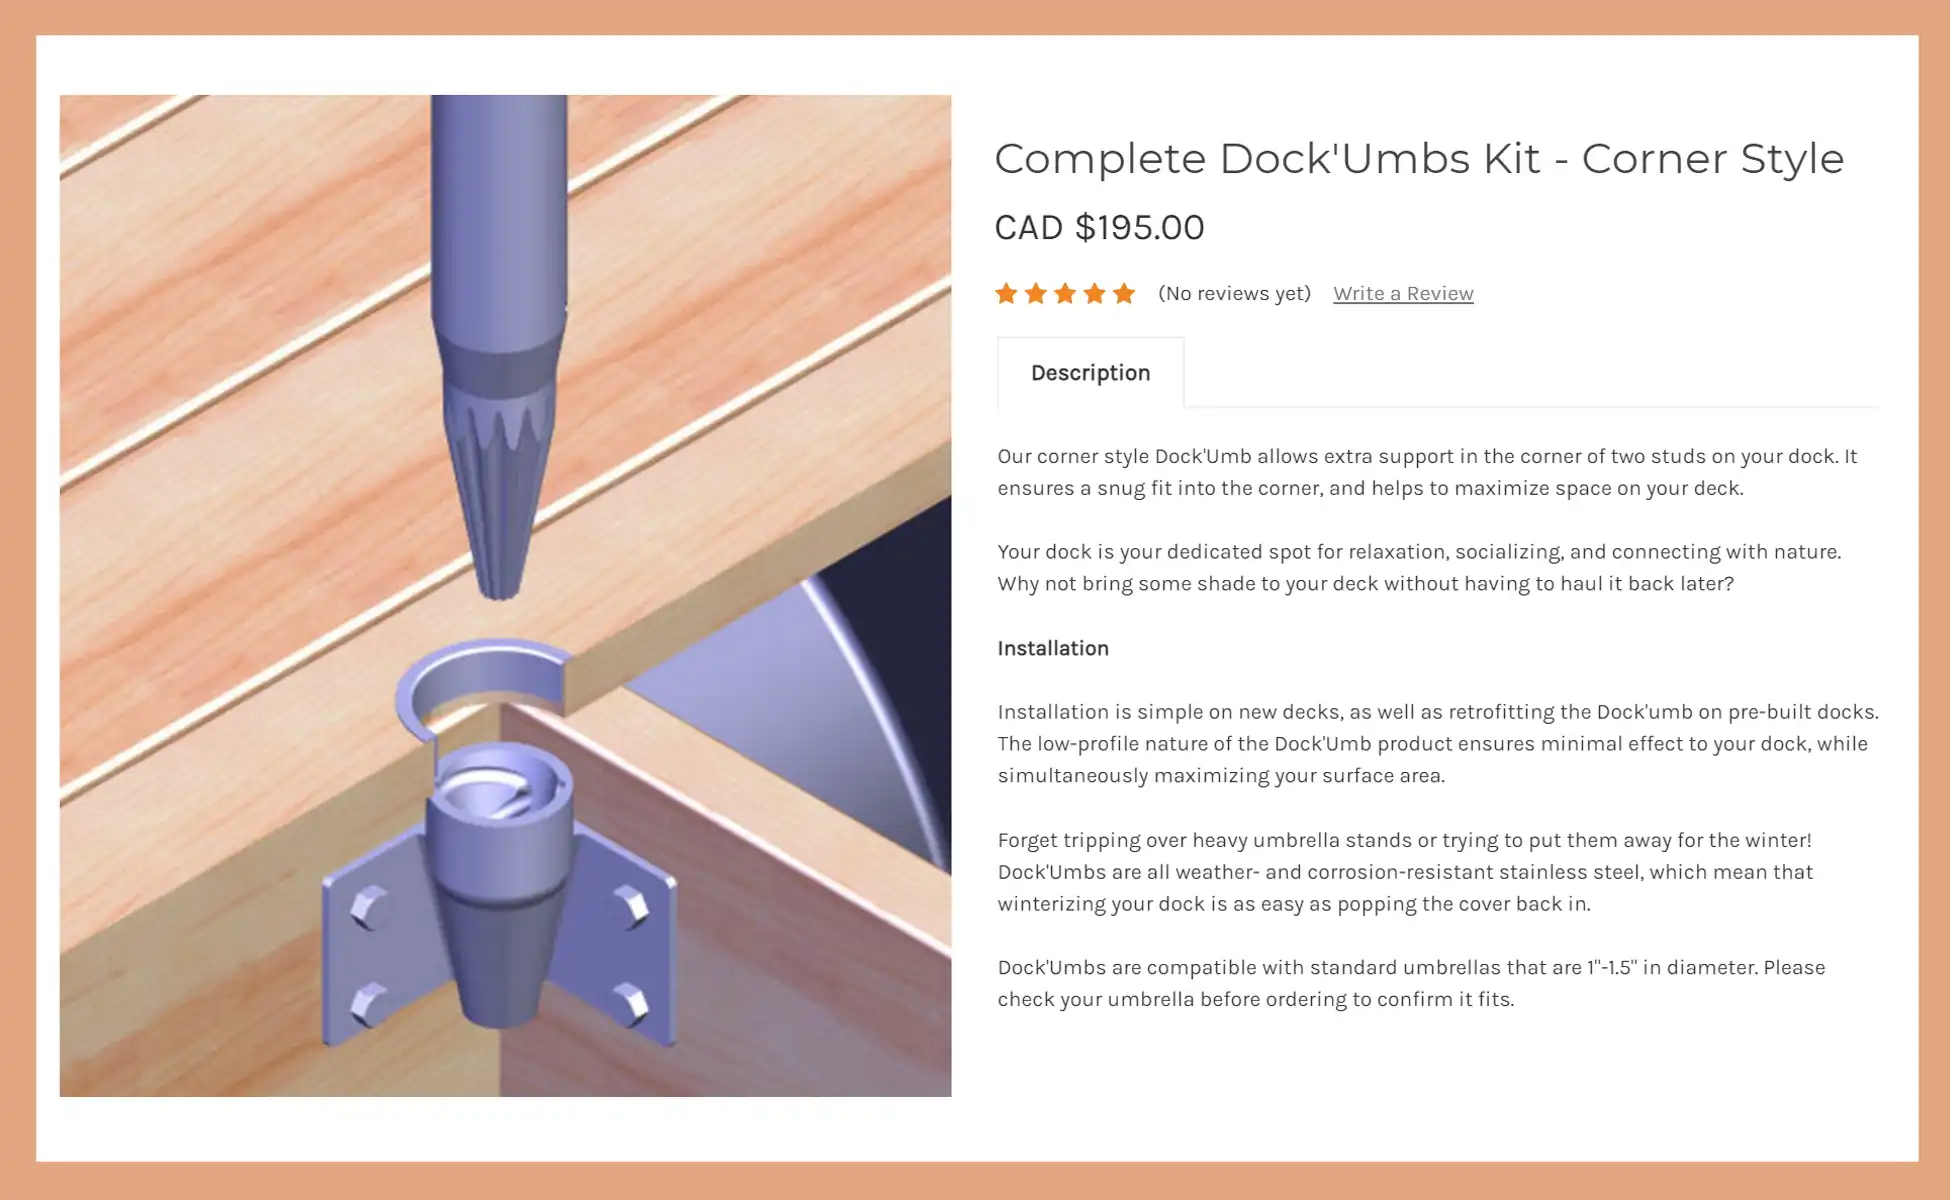 DECK'UMBS 1.5 inch Complete CORNER Style Kits $195